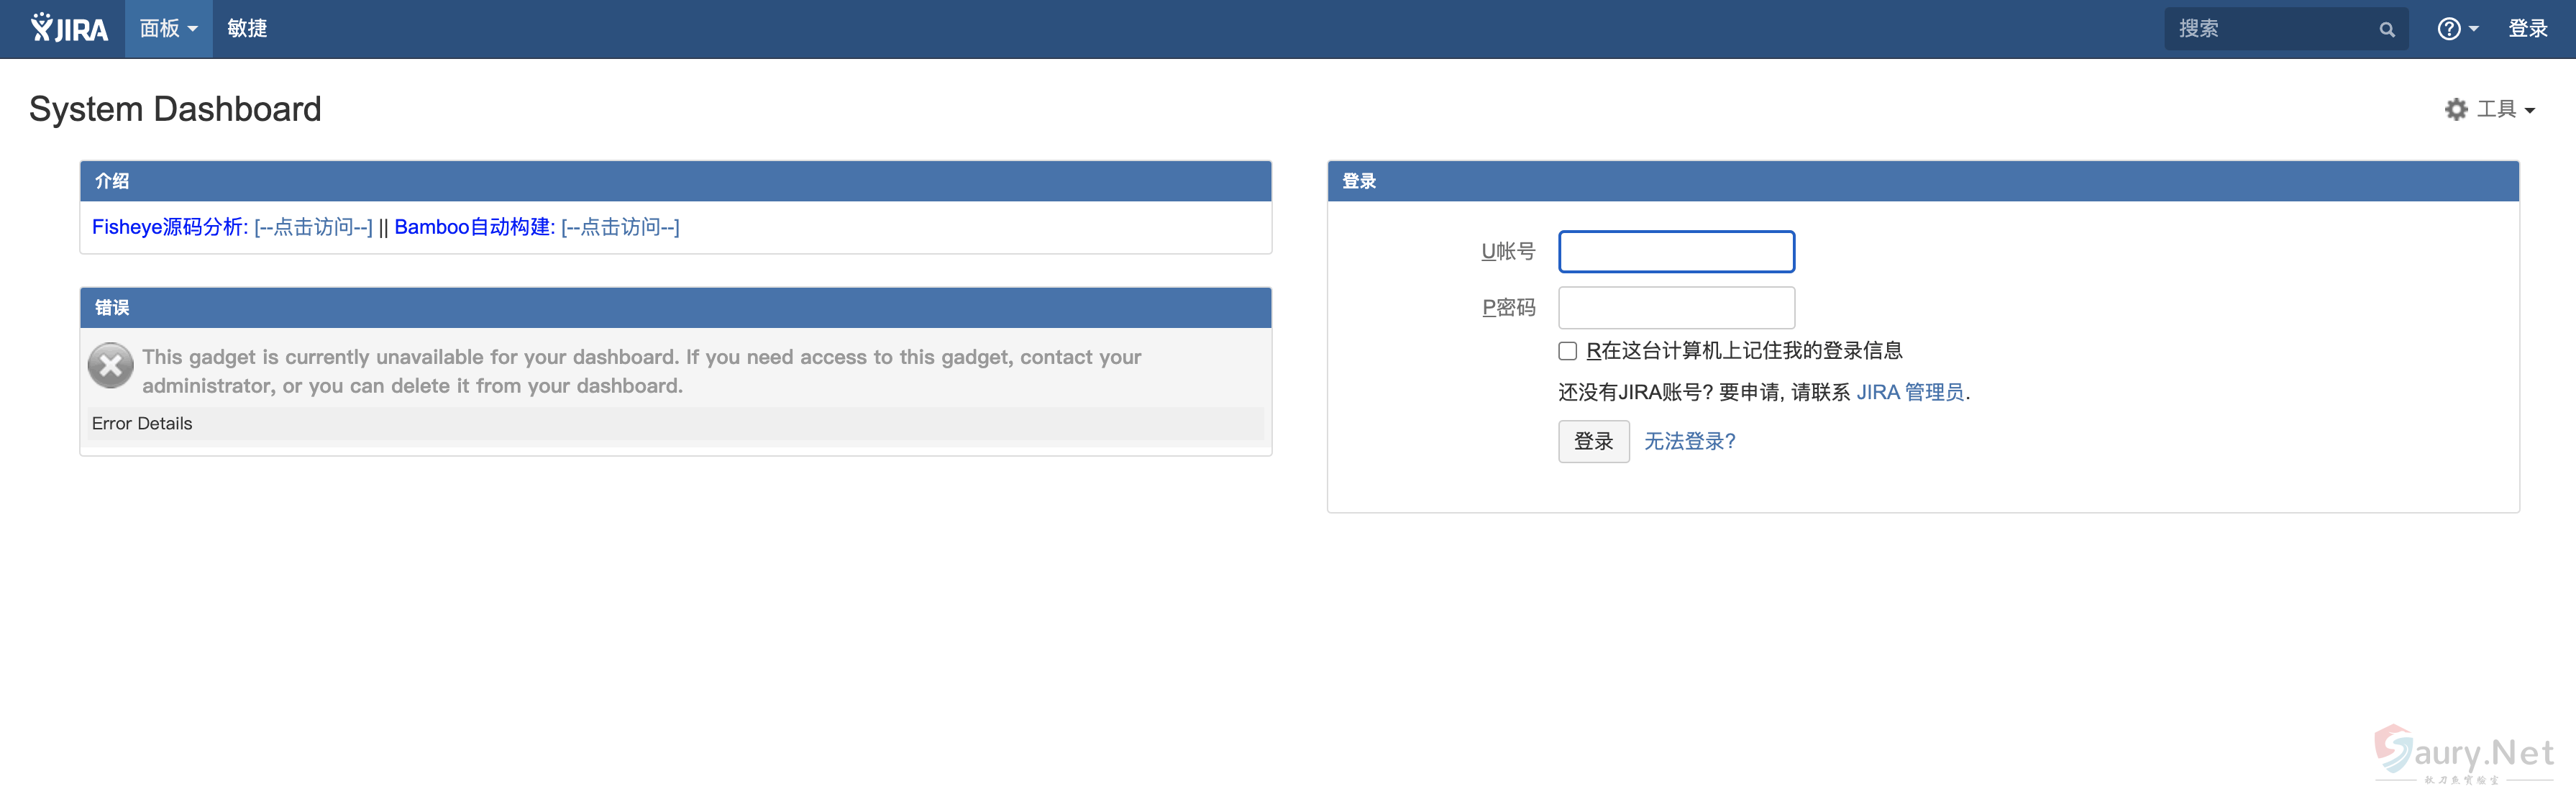 Atlassian Jira makeRequest SSRF漏洞 #CVE-2019-8451-秋刀鱼实验室